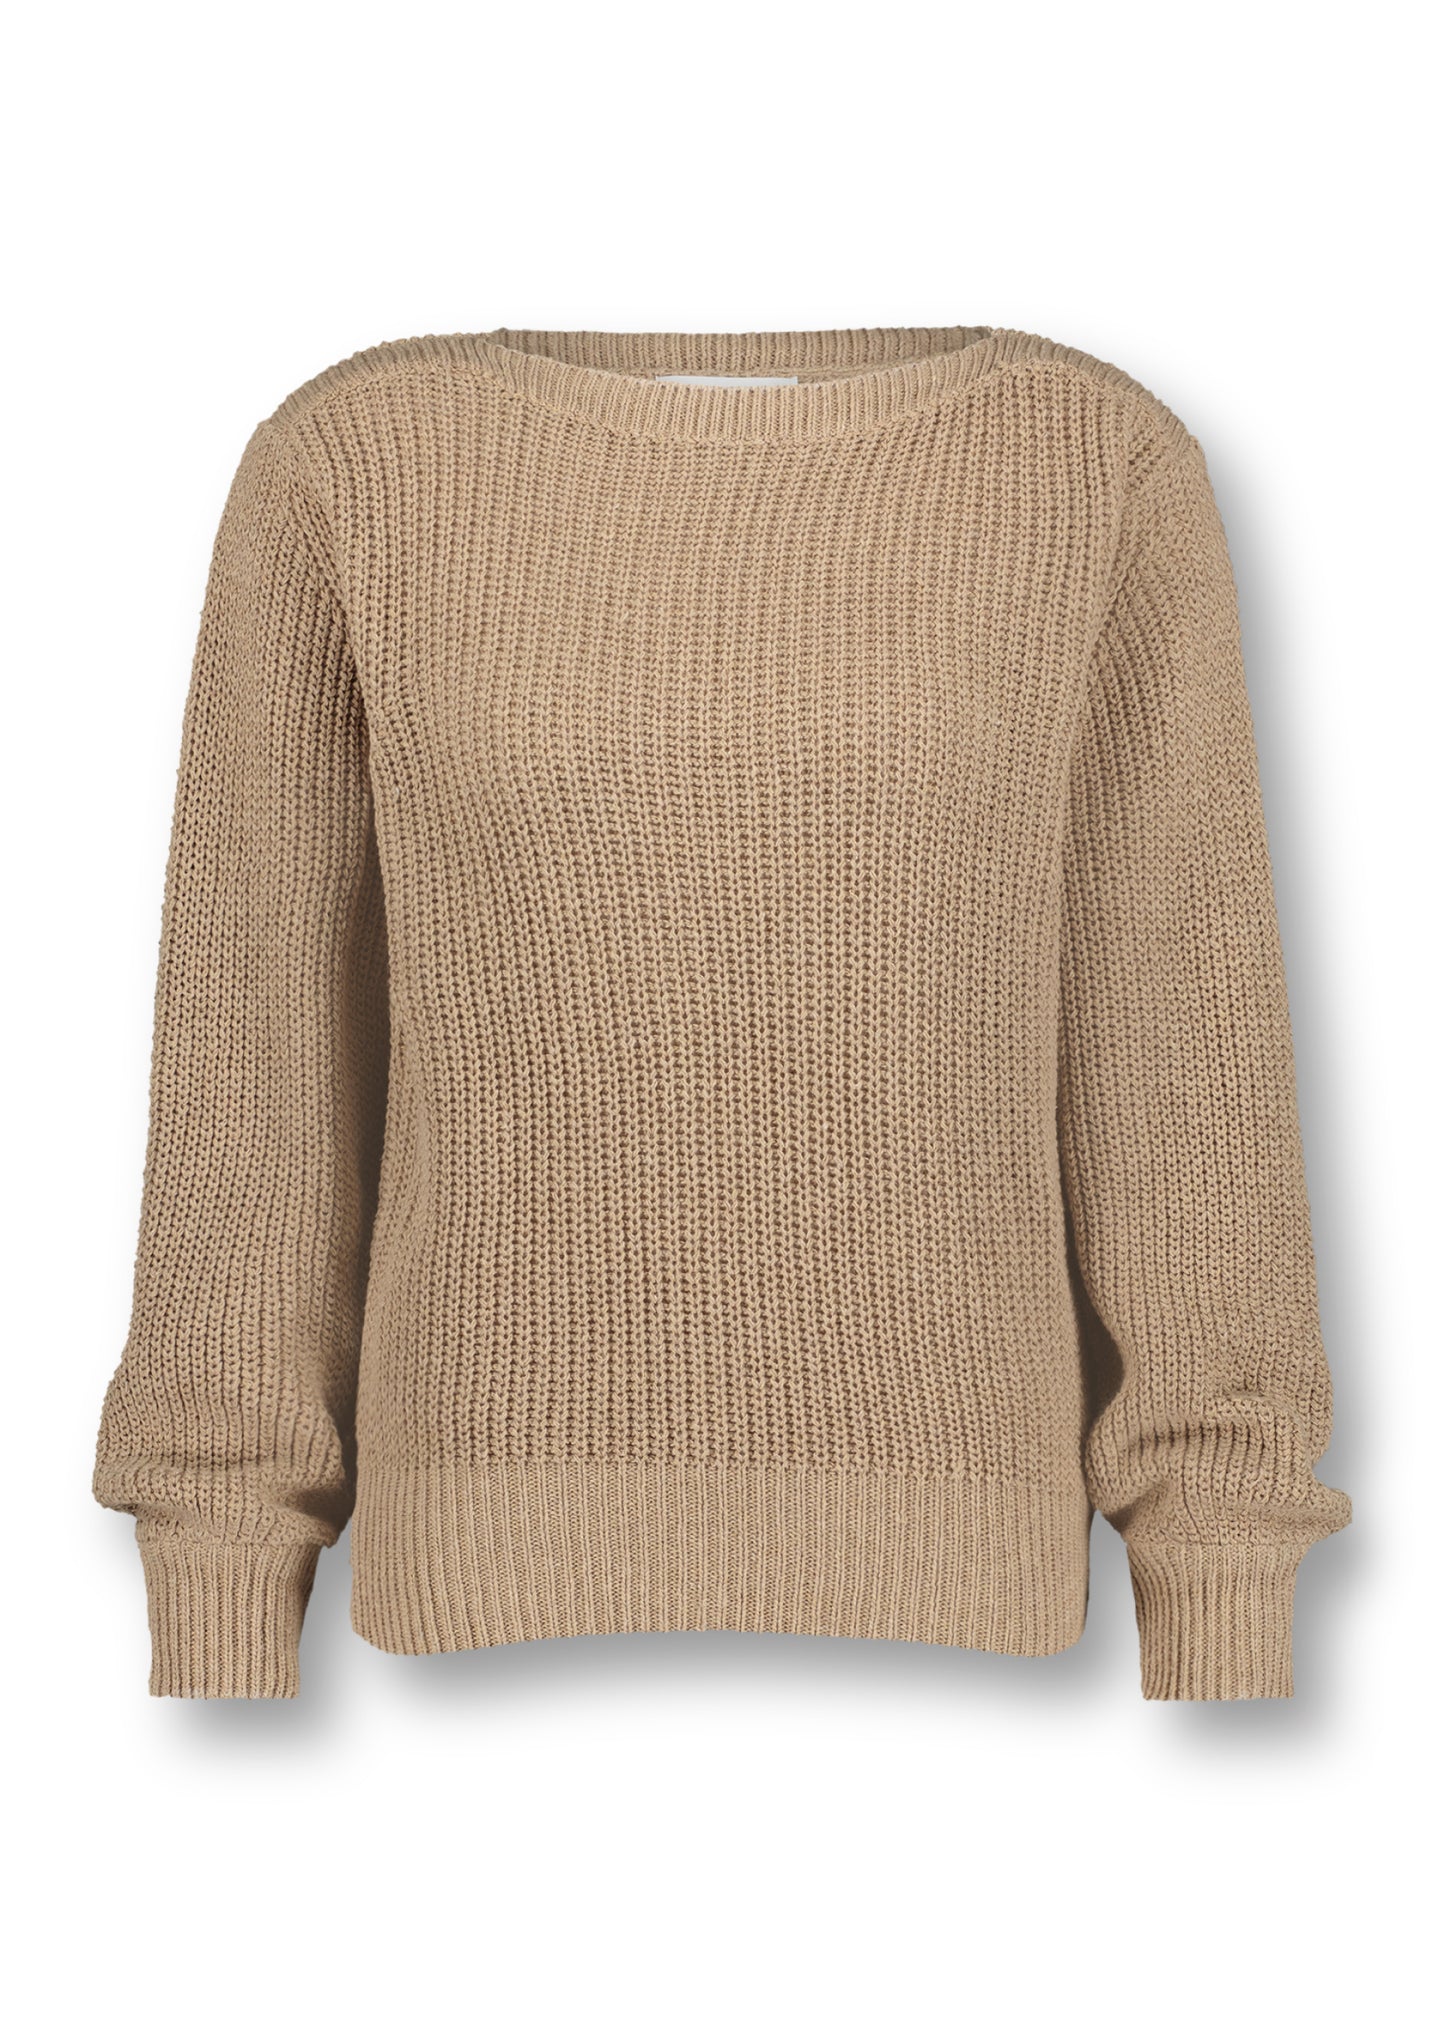 Solis Sweater - Sand - Packshot - Sweater - Simple